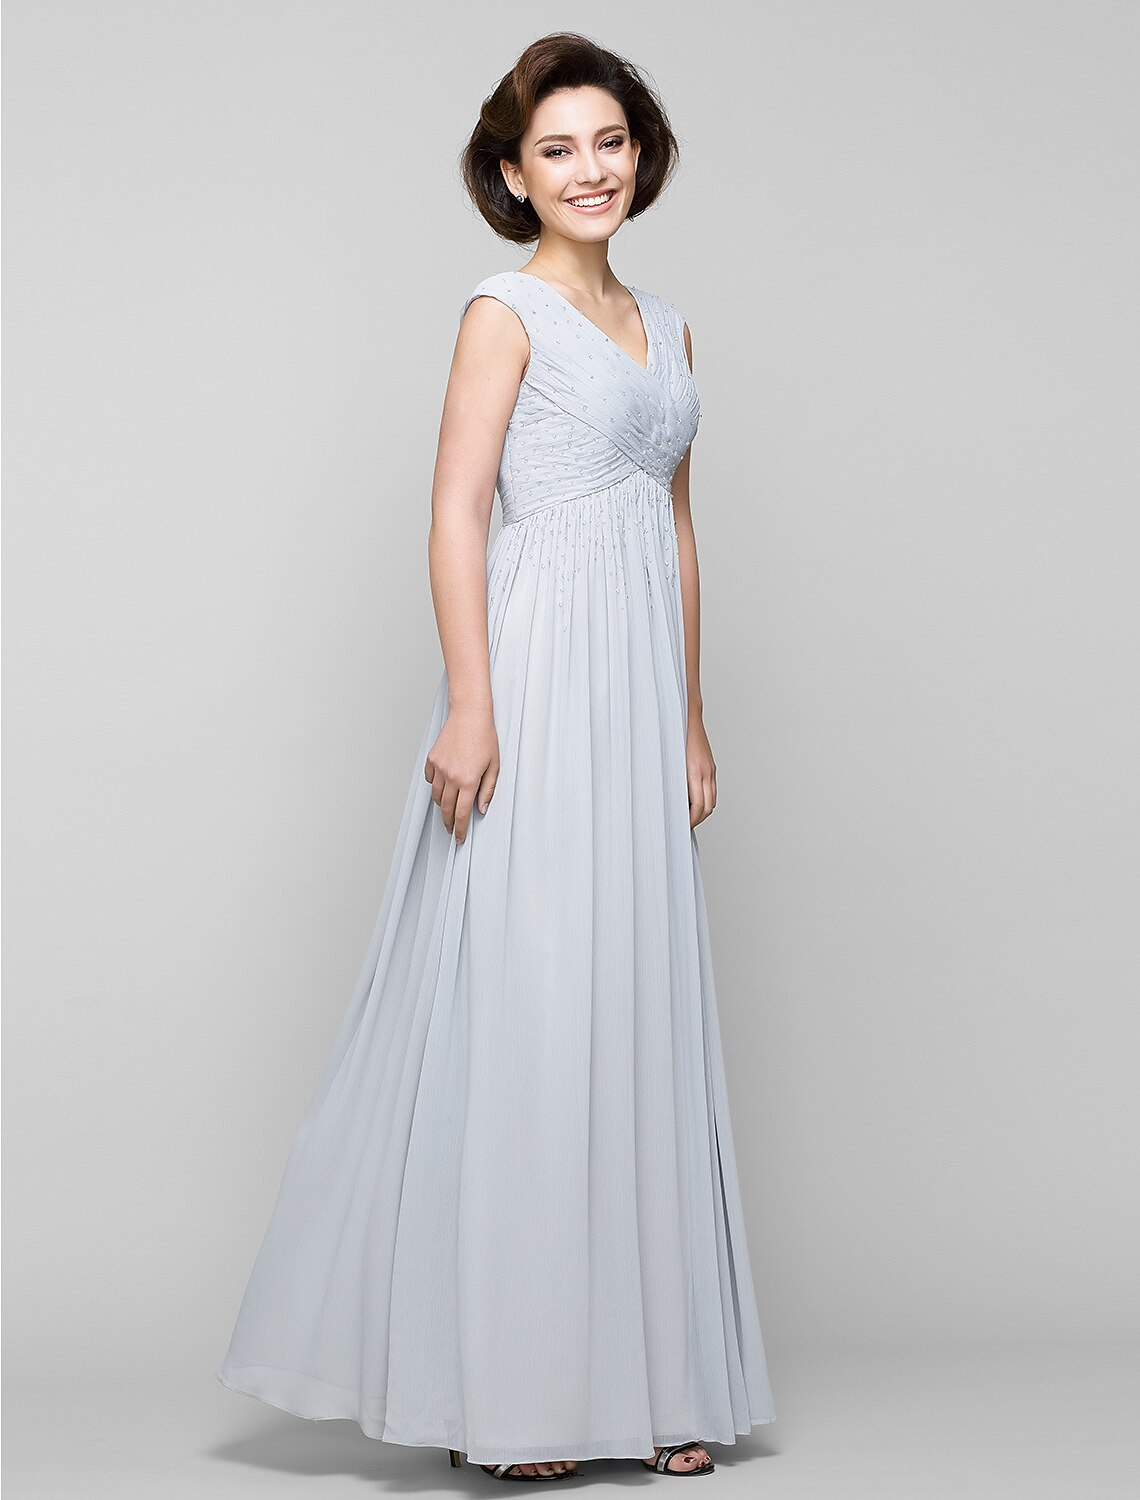 A-Line Mother of the Bride Dress Elegant V Neck Floor Length Chiffon Sleeveless with Cross Beading